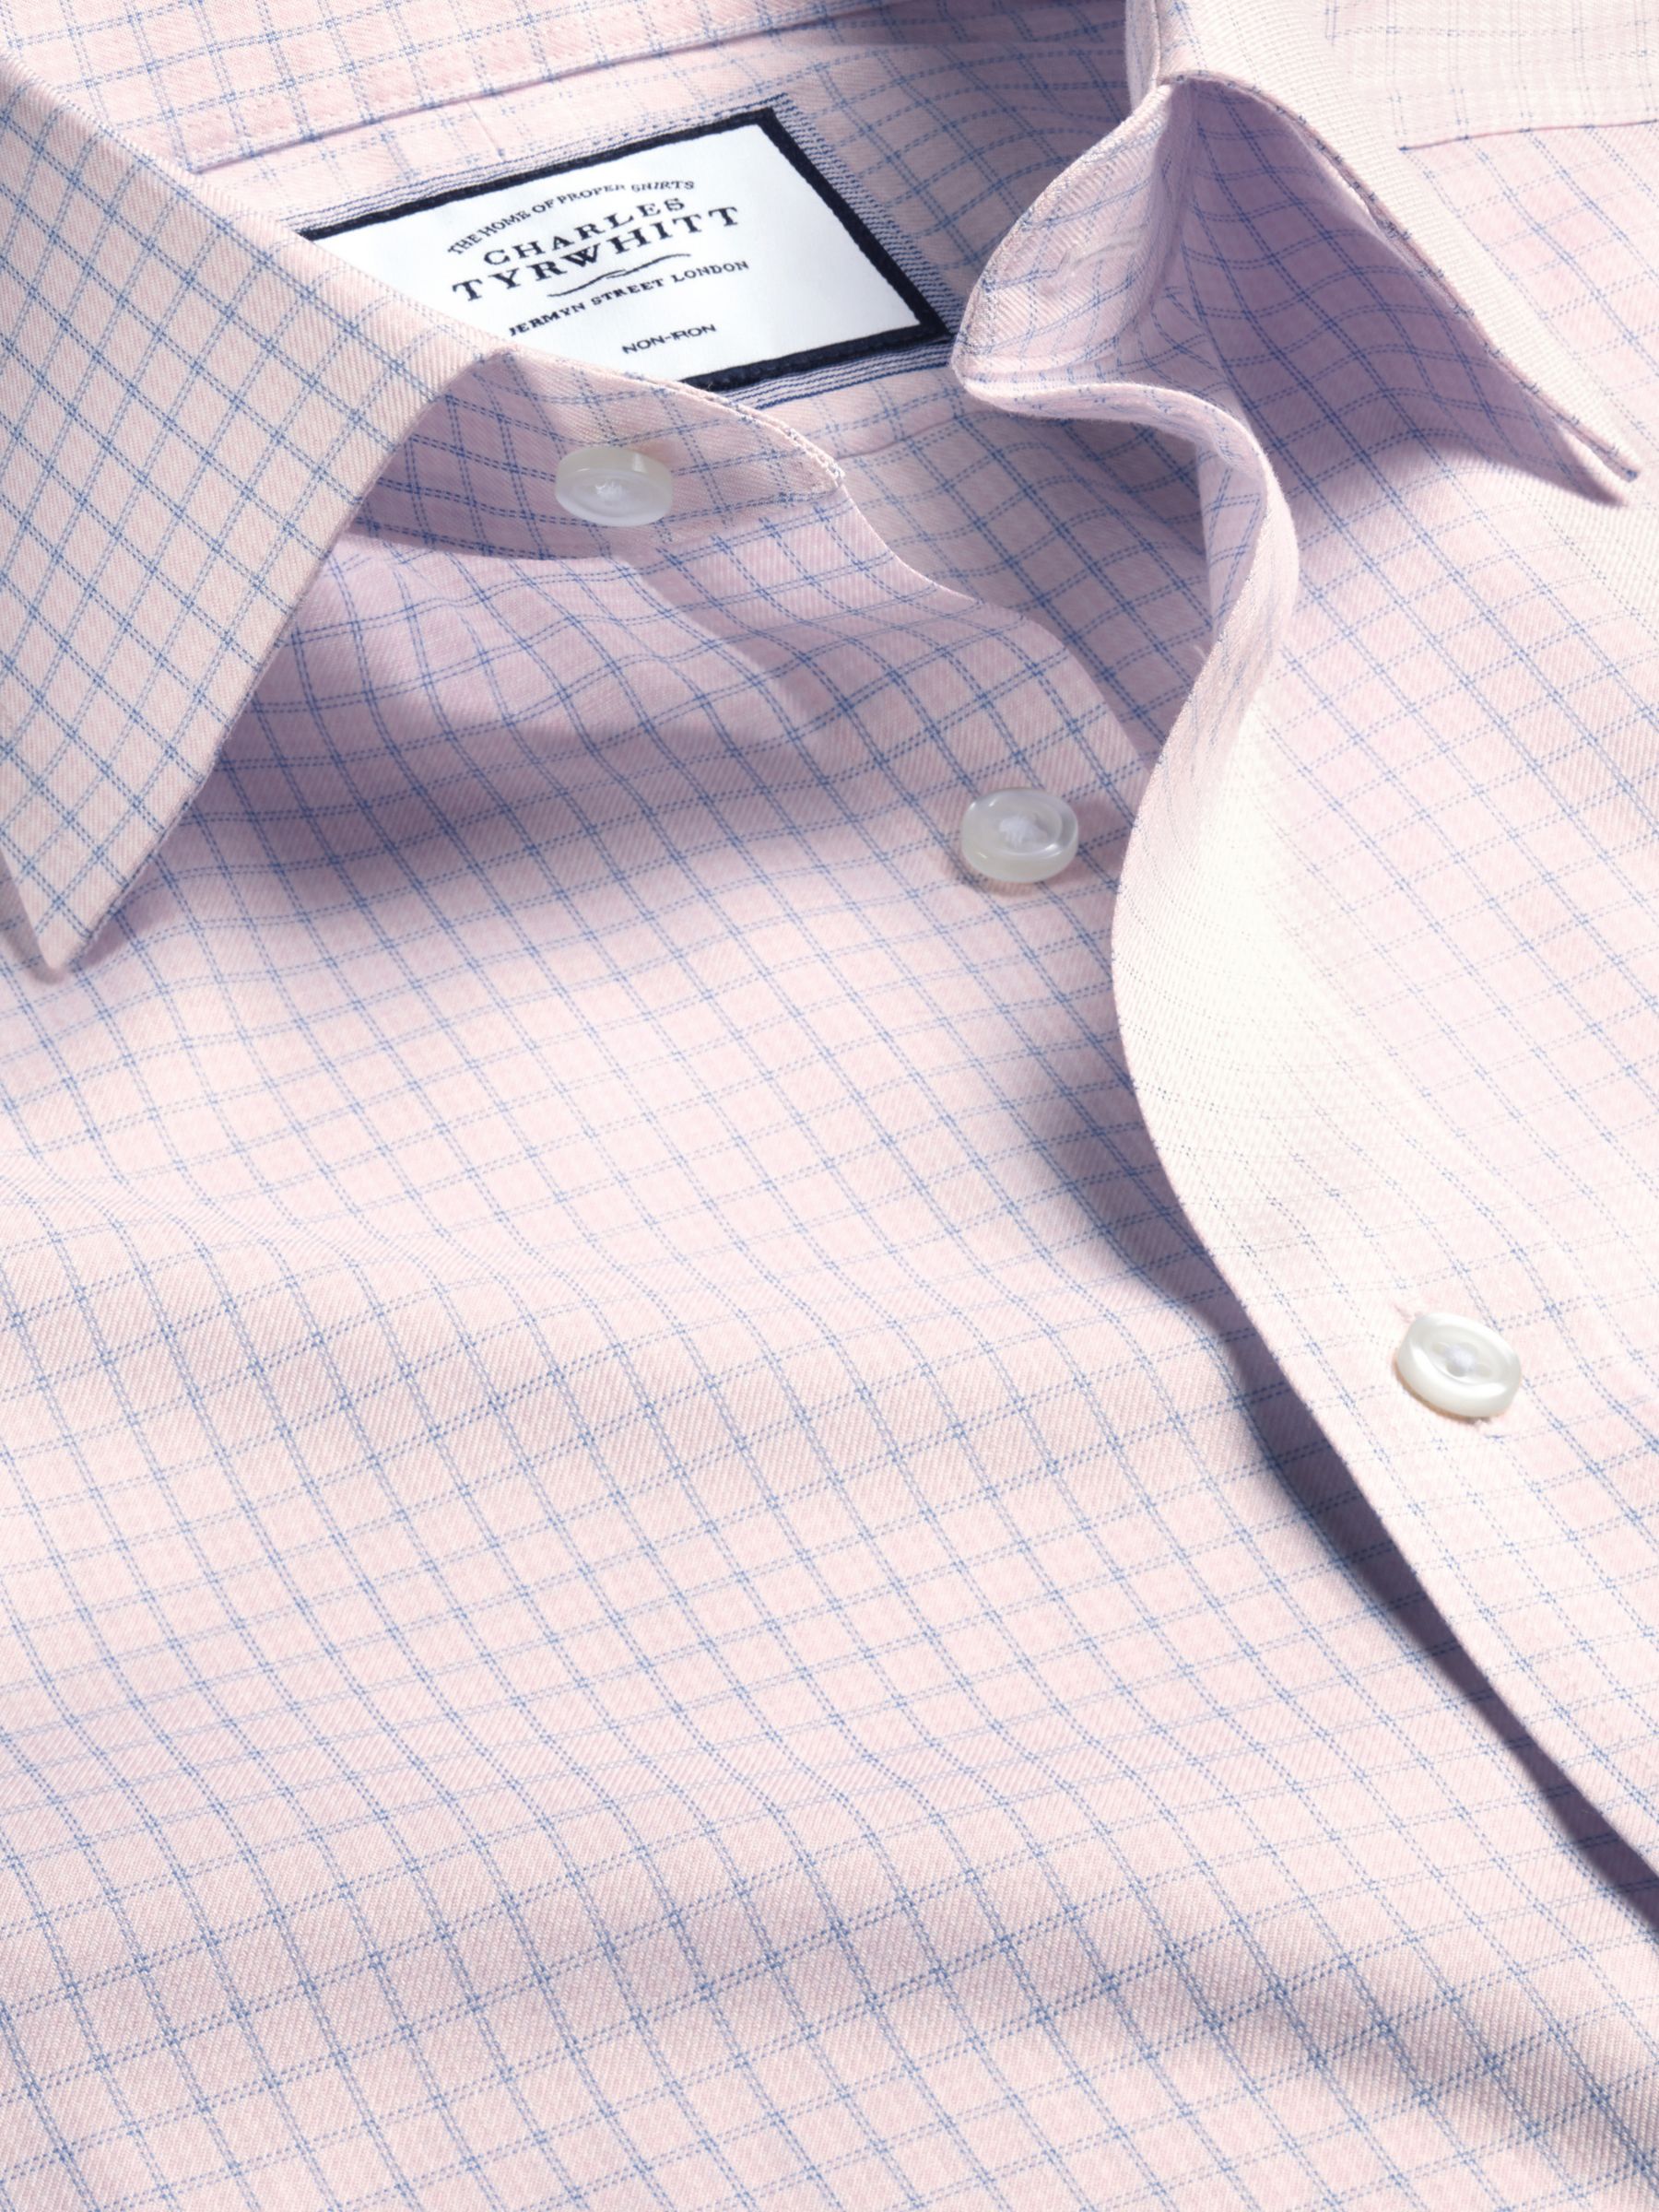 Charles Tyrwhitt Classic Check Shirt, Light Pink, 15.5S